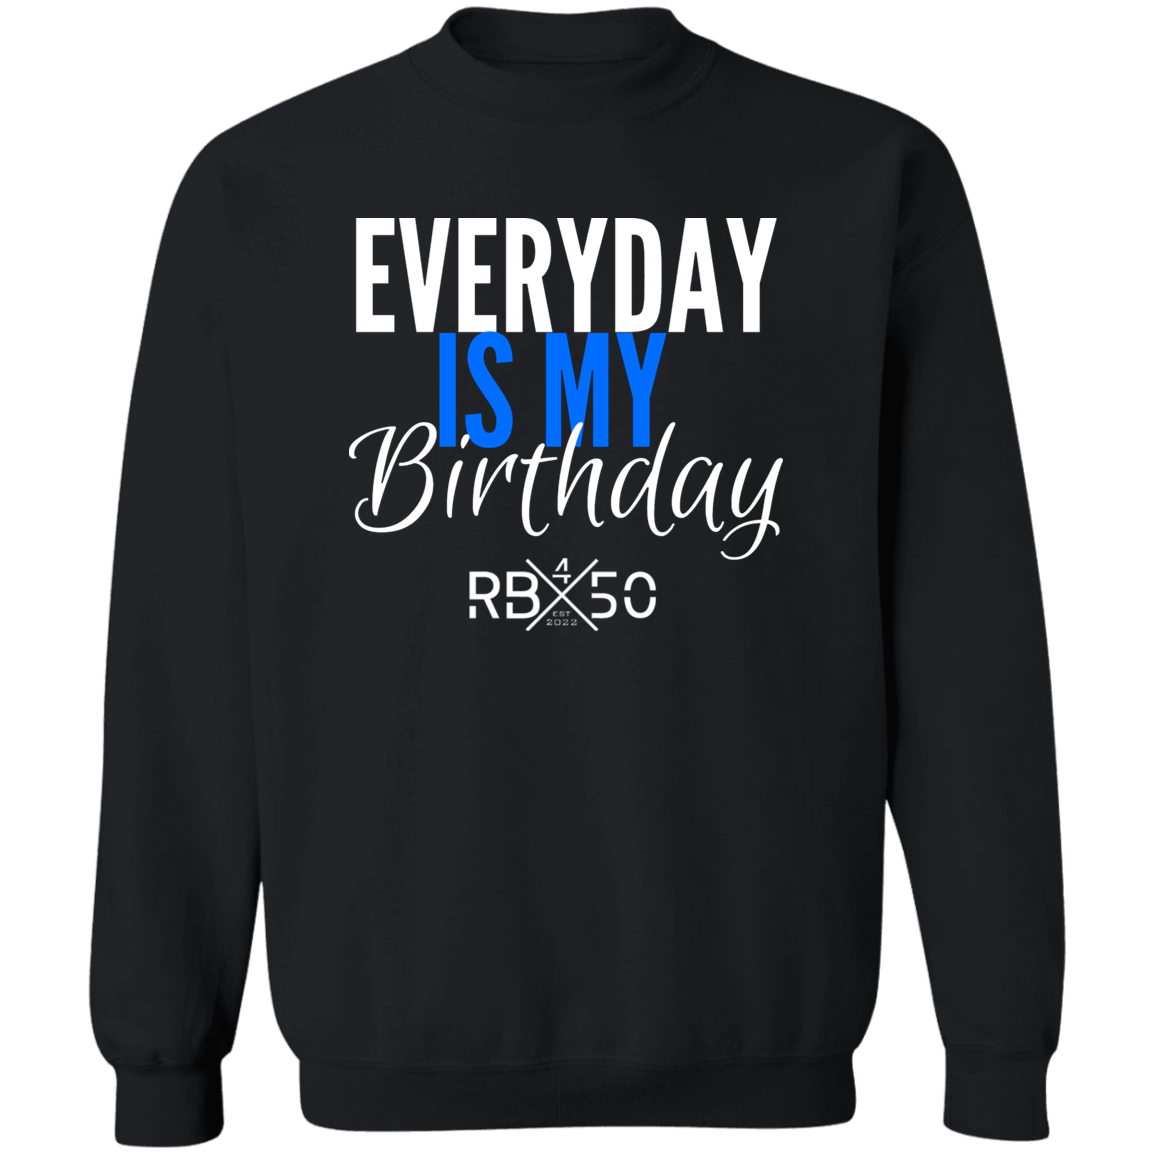 RB450 EVERYDAY Pullover Crewneck Sweatshirt 8 oz (Closeout)